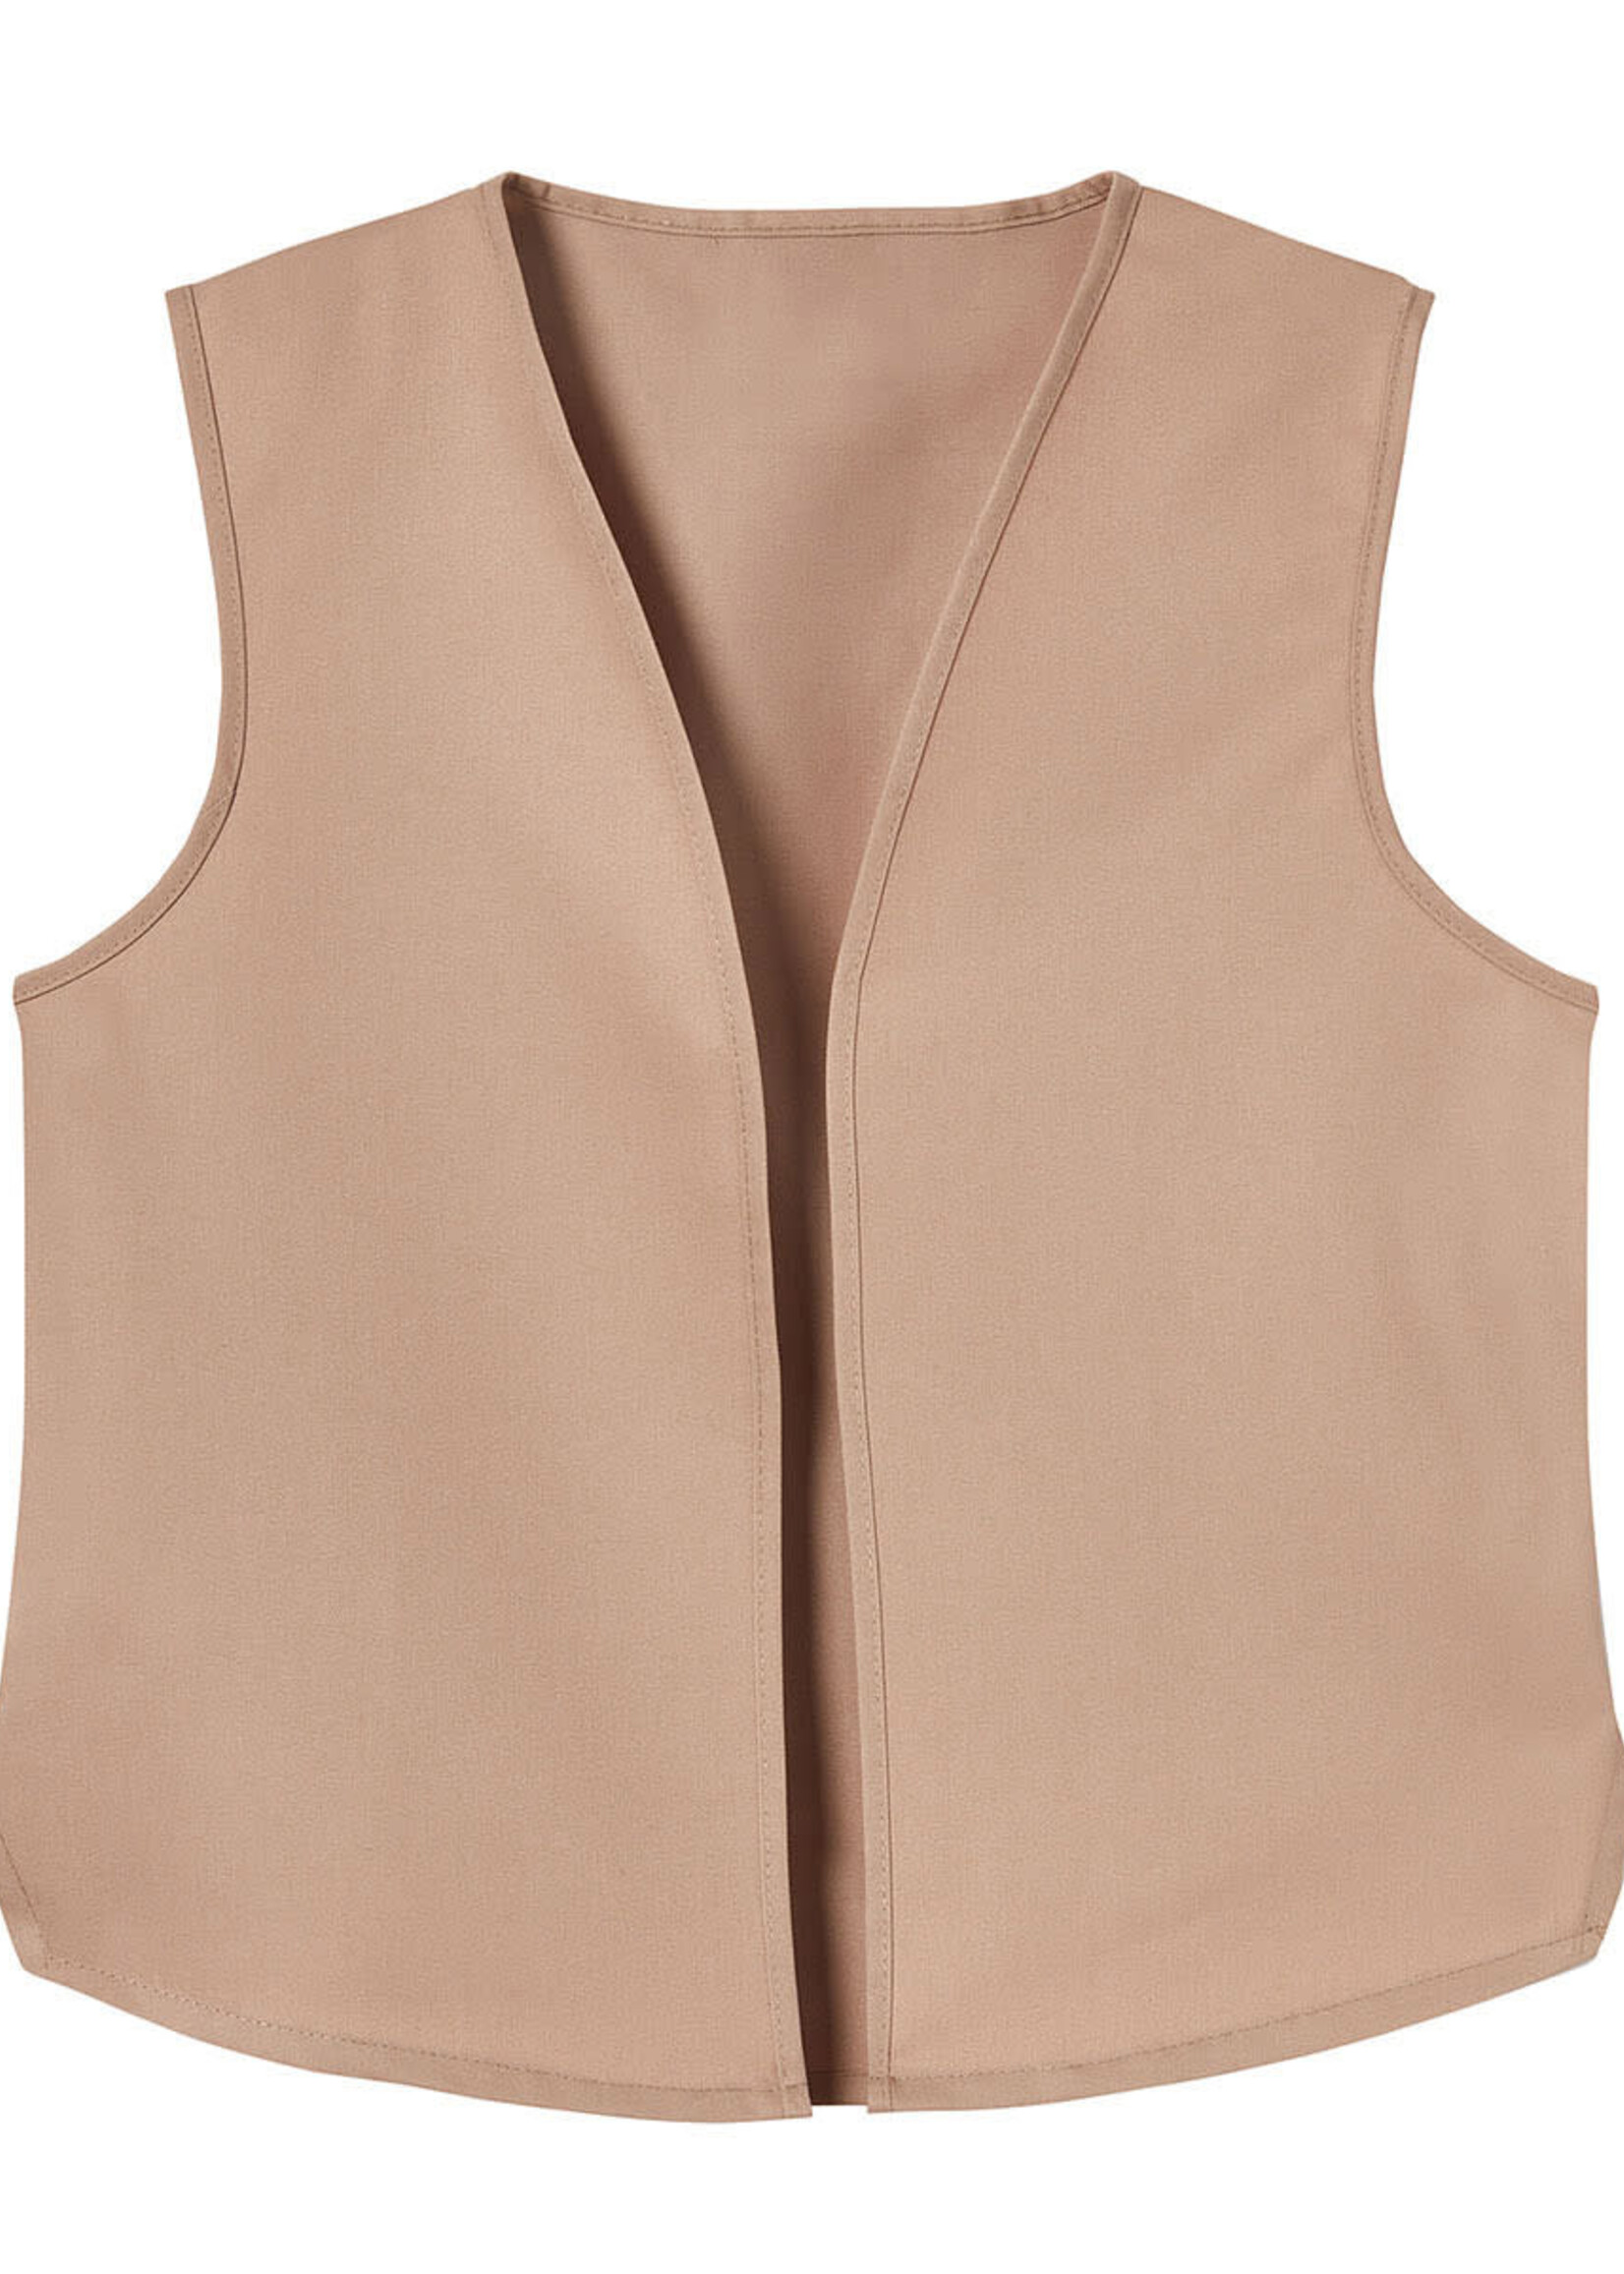 Cadette/Senior/Ambassador Vest Size Medium